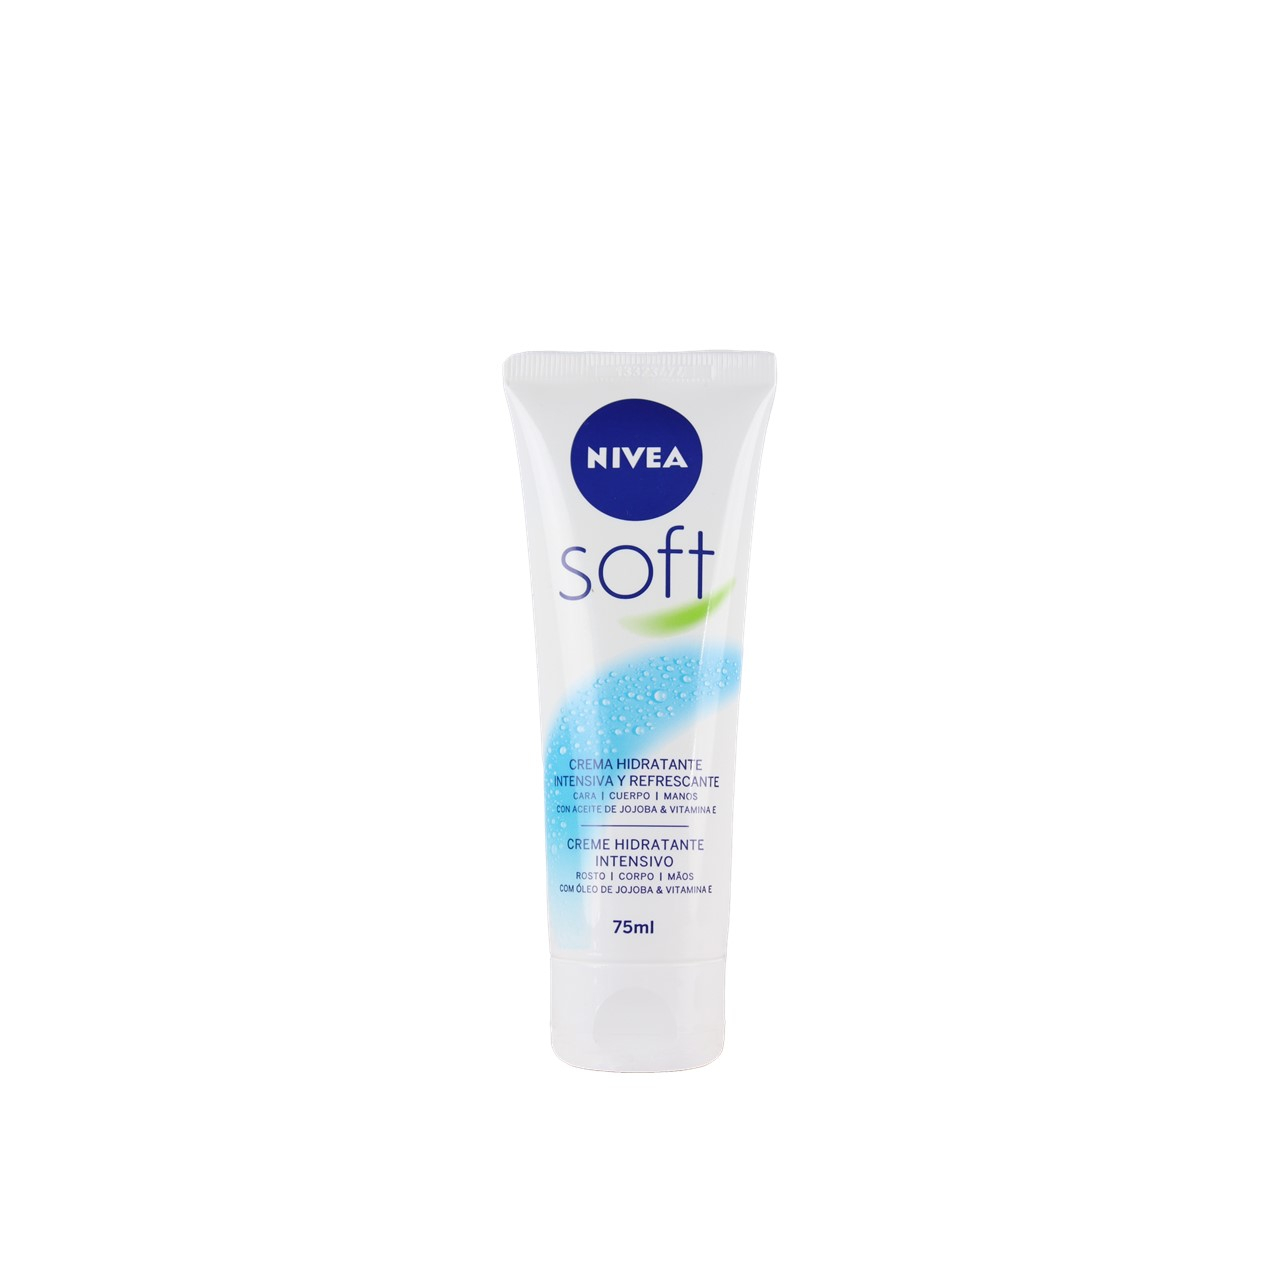 Nivea Soft Refreshingly Intensive Moisturizing Cream 75ml (2.54fl oz)